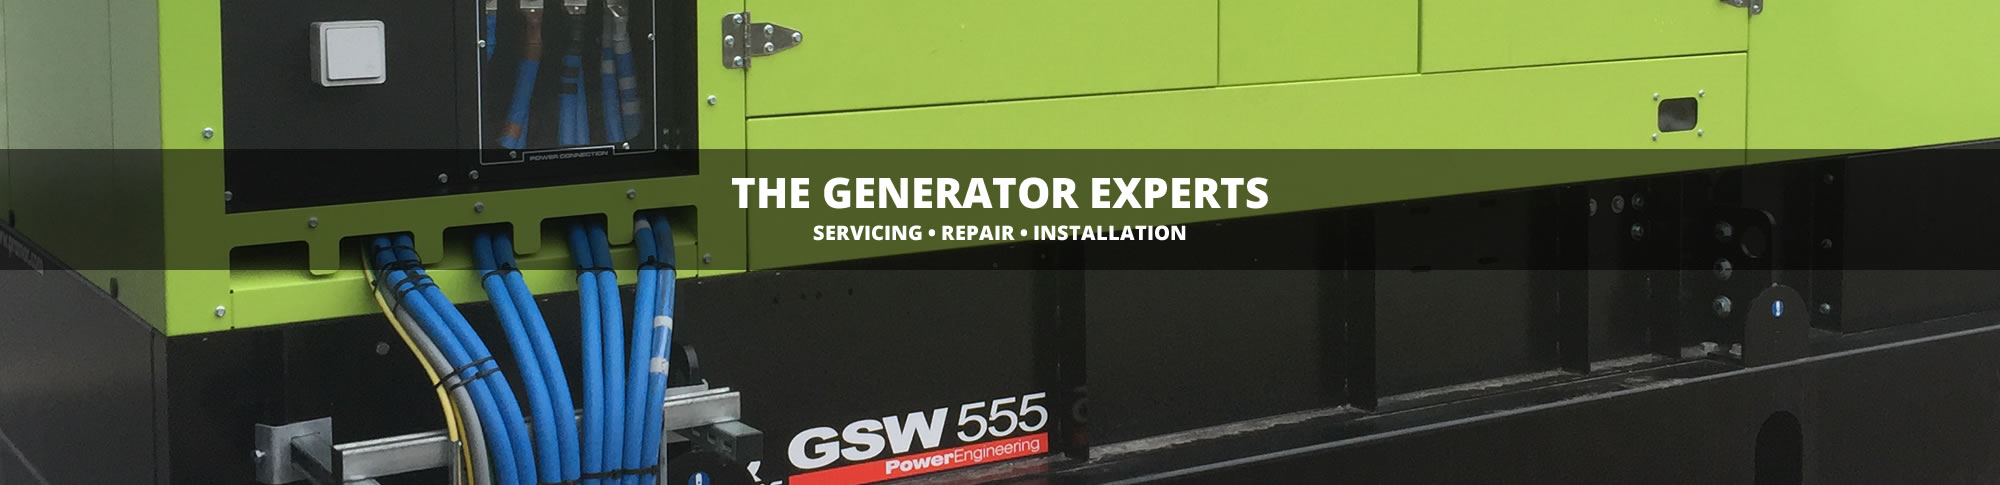 The Generator Experts, Servicing, Repair, Installation